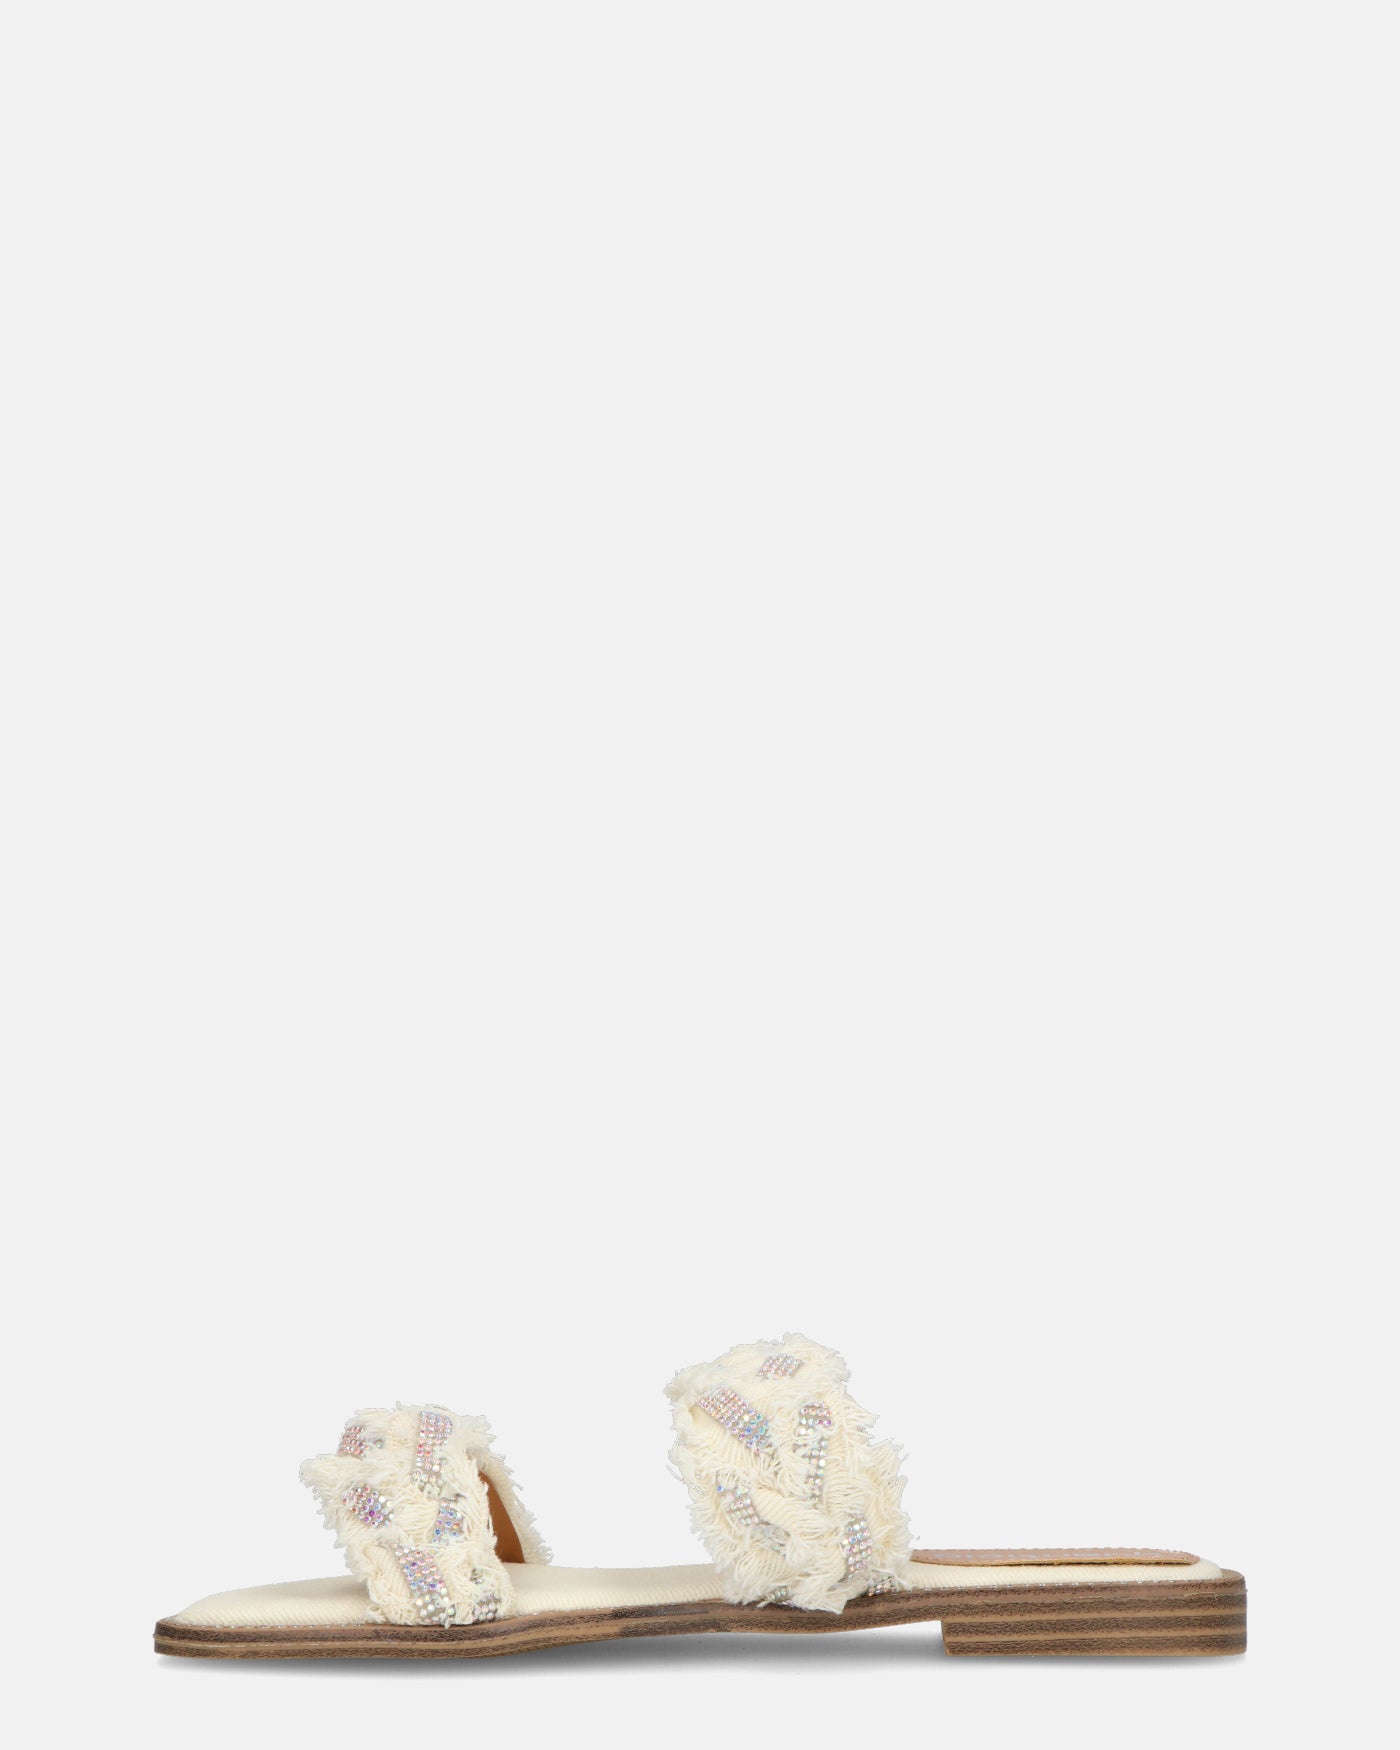 KALI - light beige fabric sandals with gems